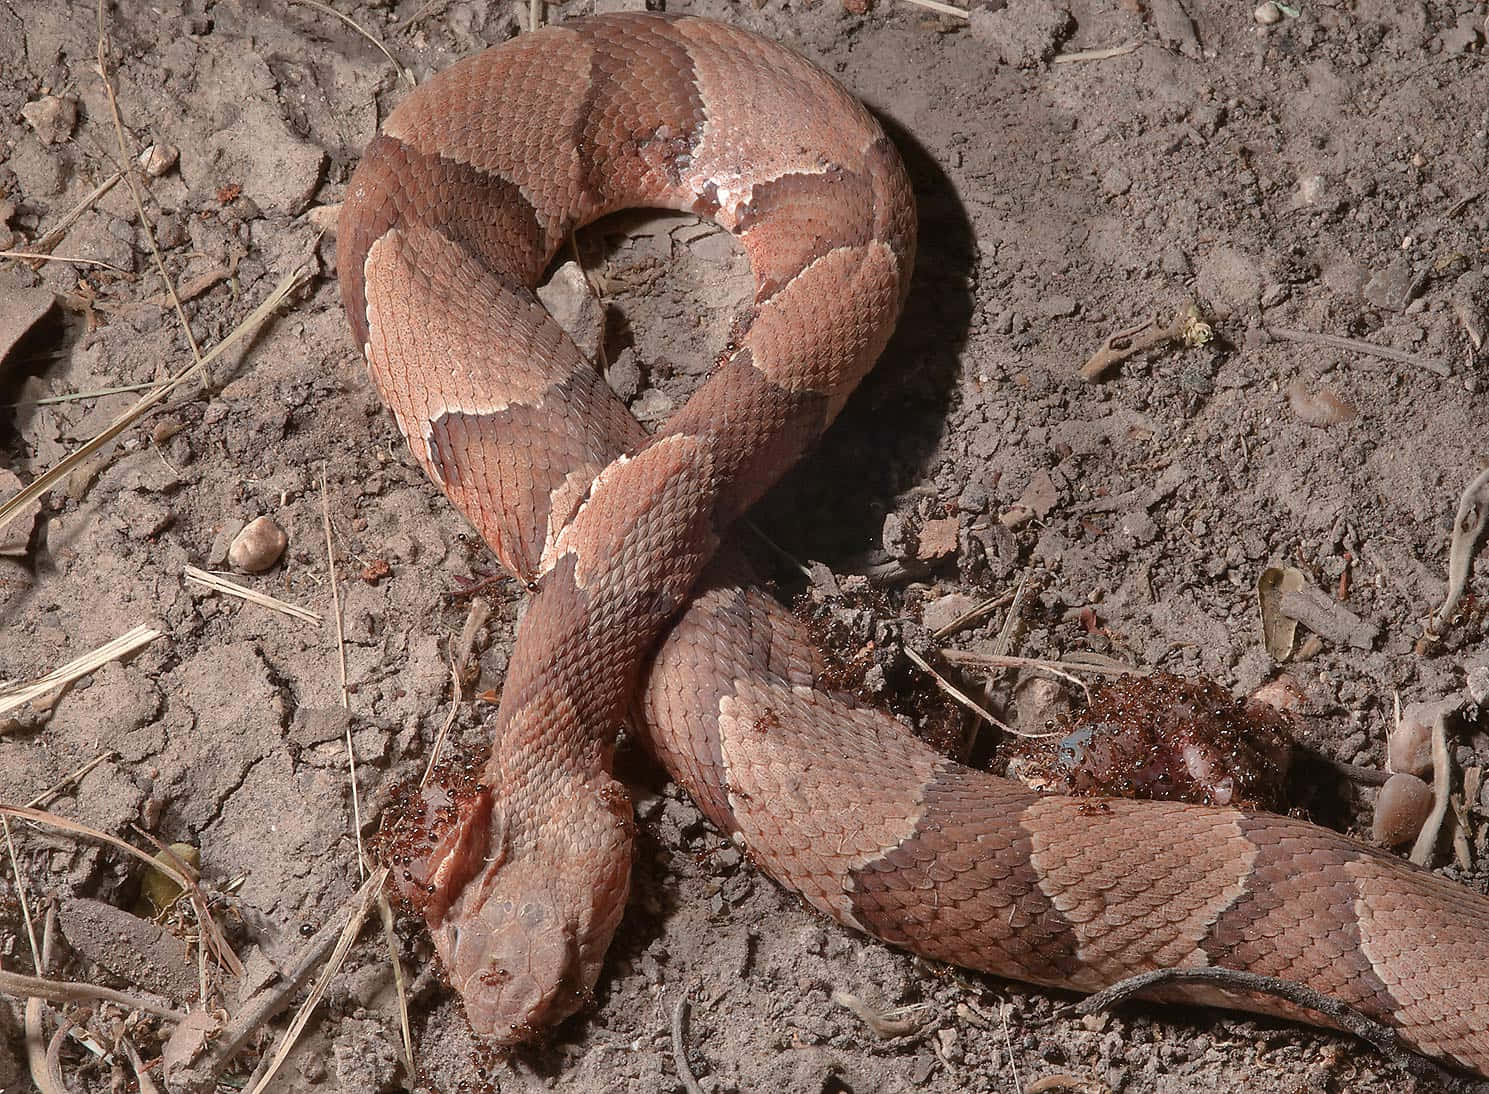 "Copperhead Snake - A Daring Predator Despite Its Colorful Appearance"